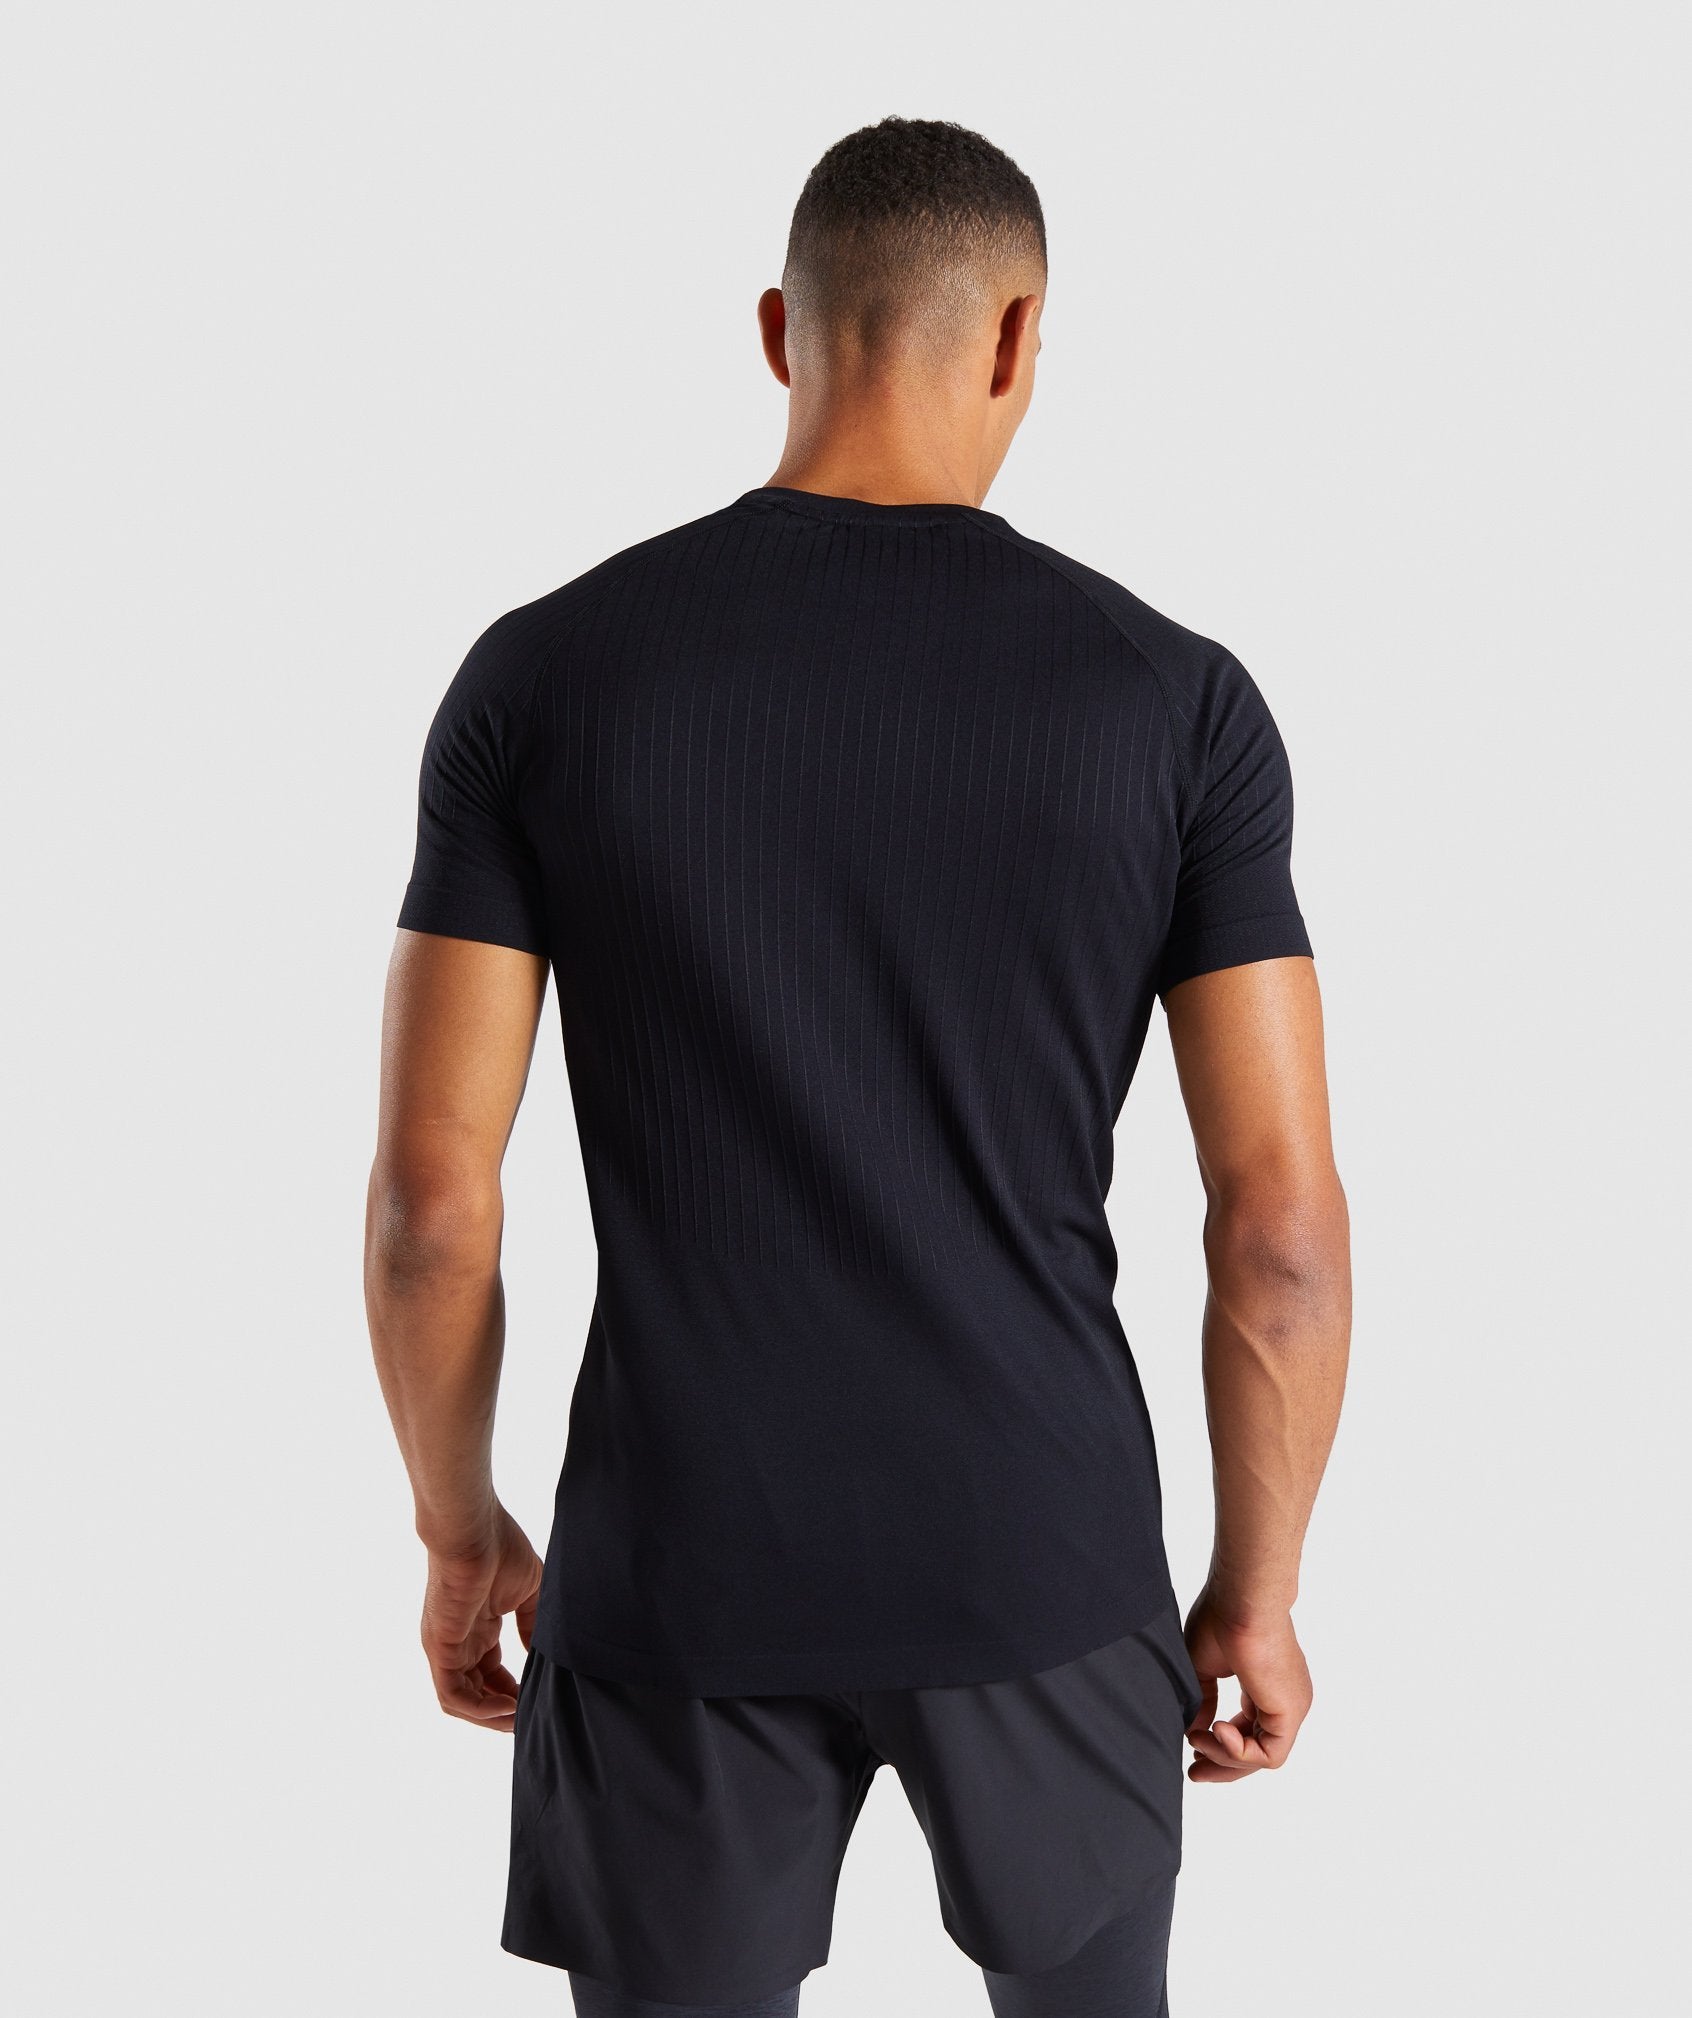 Superior Lightweight Seamless T-Shirt in Black - view 2